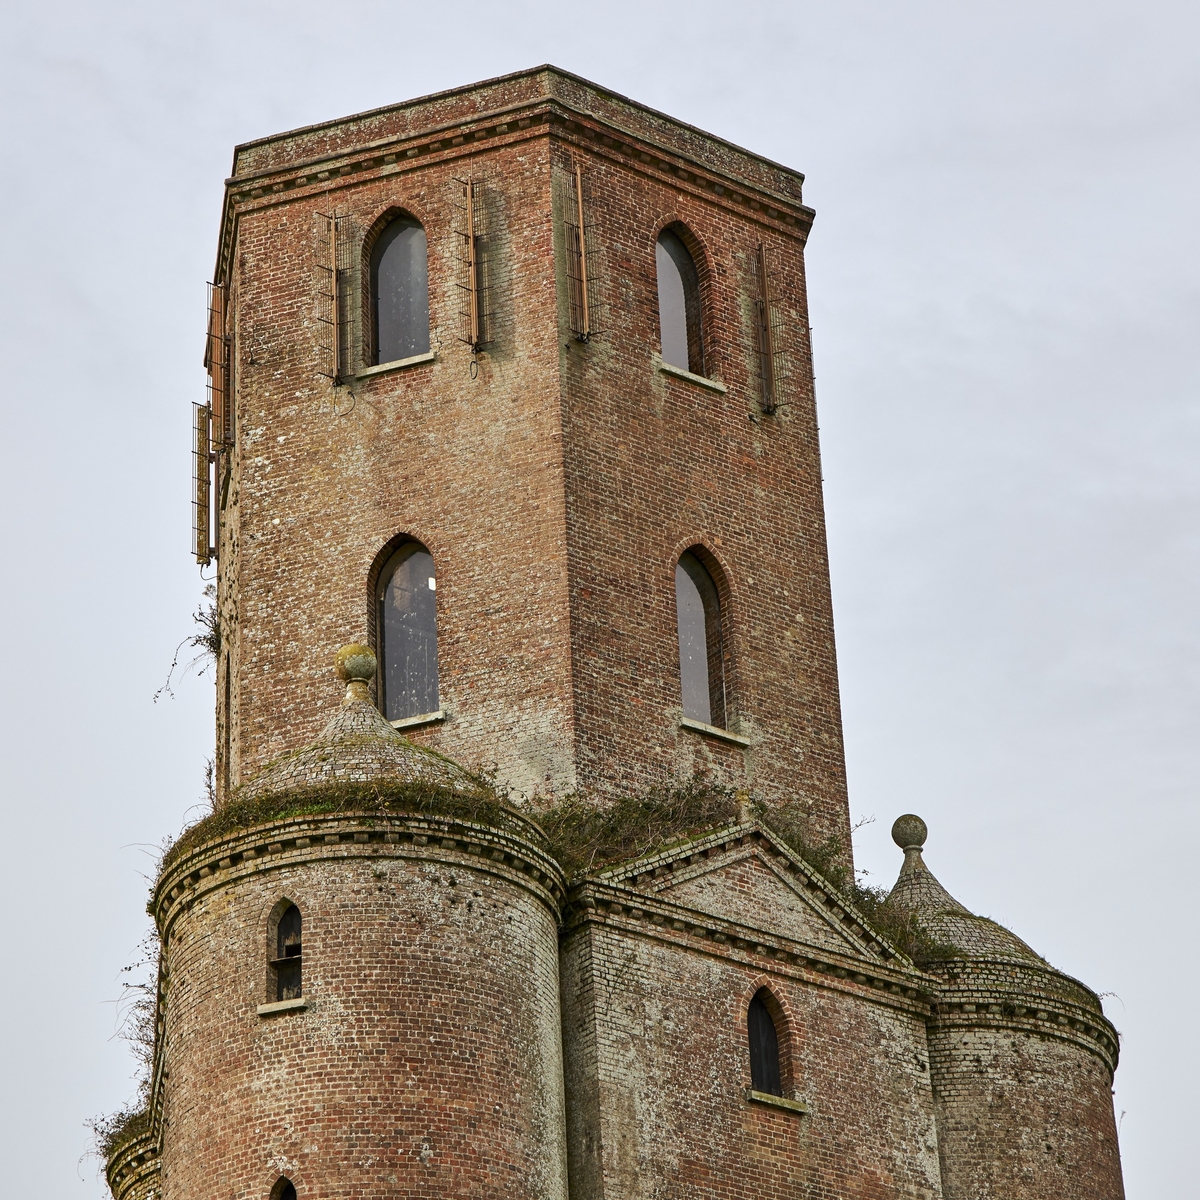 Horton Tower (Sturt's Folly)